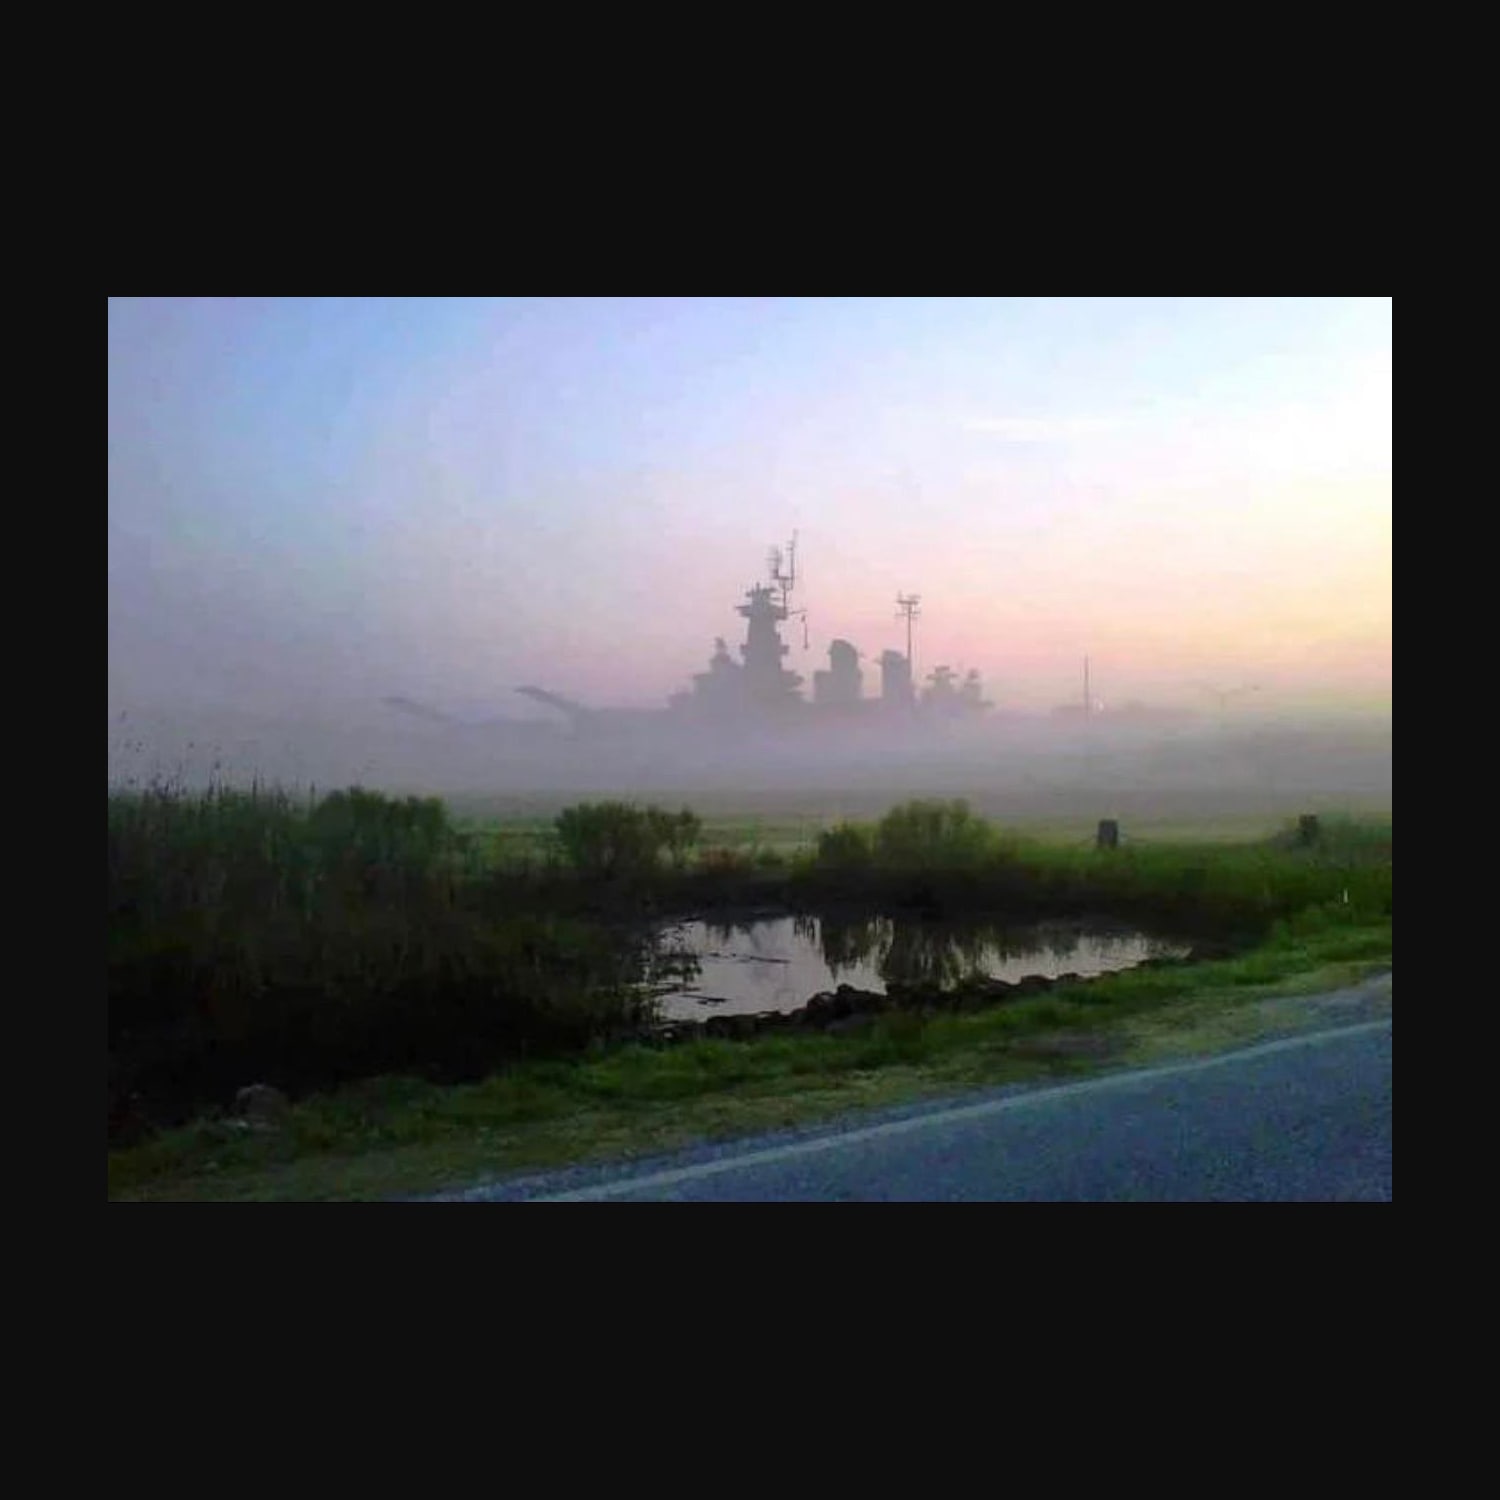 USS North Carolina in the fog